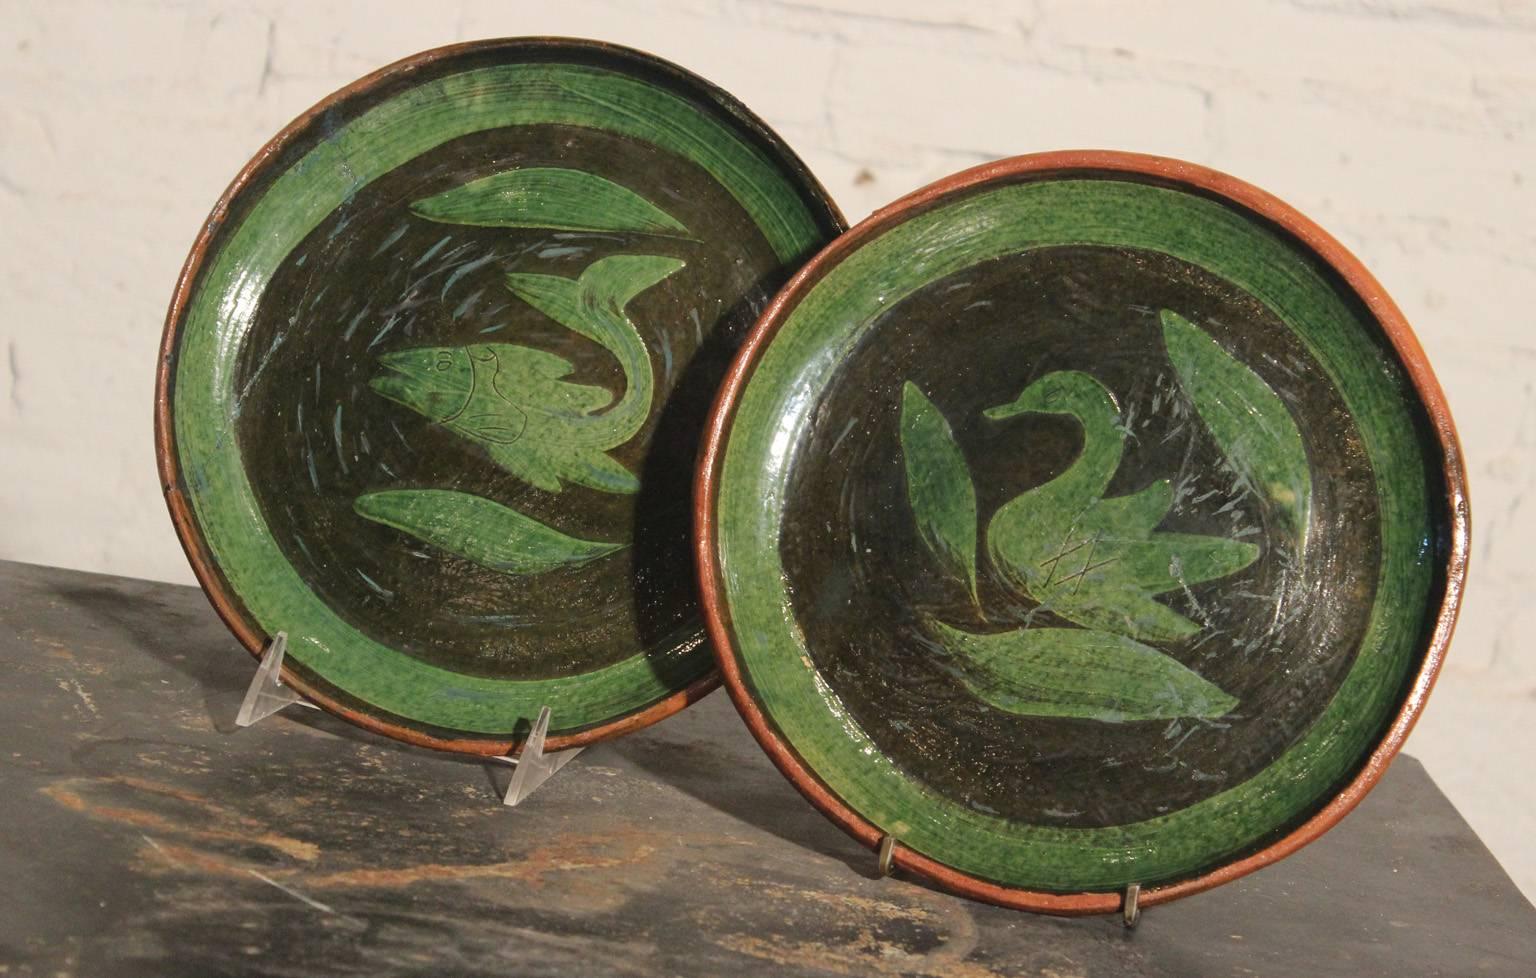 20th Century Patamban Pottery Plates from Michoacán, Mexico